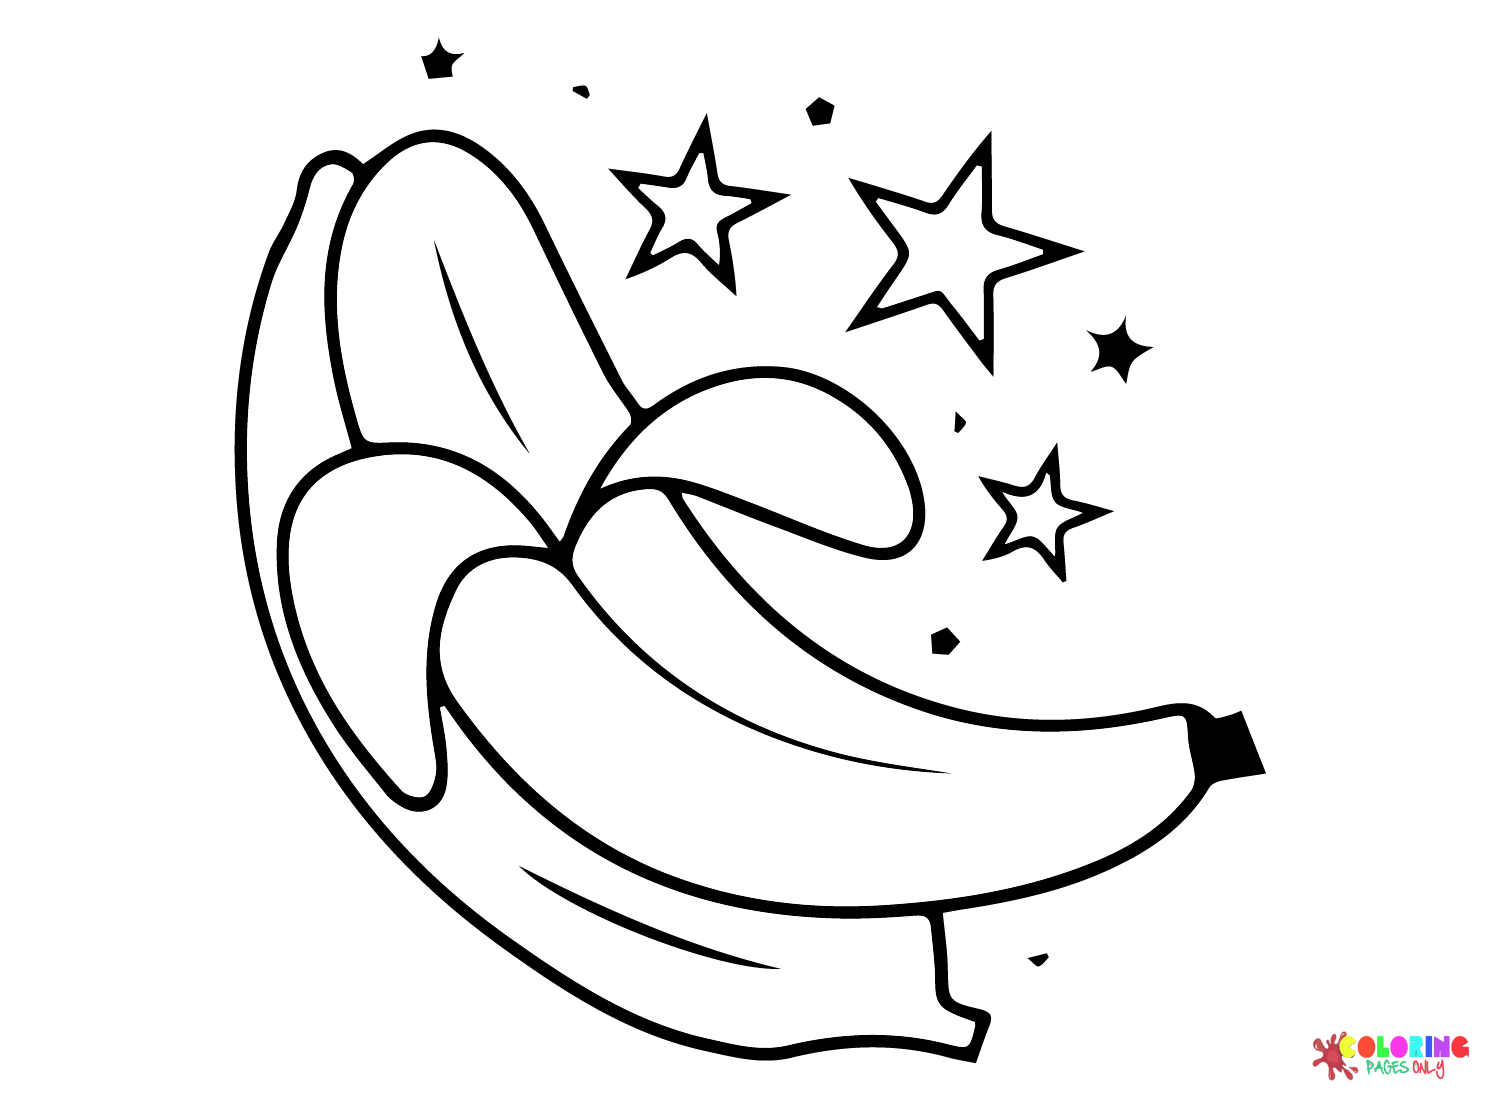 Bananas Estrela from Bananas